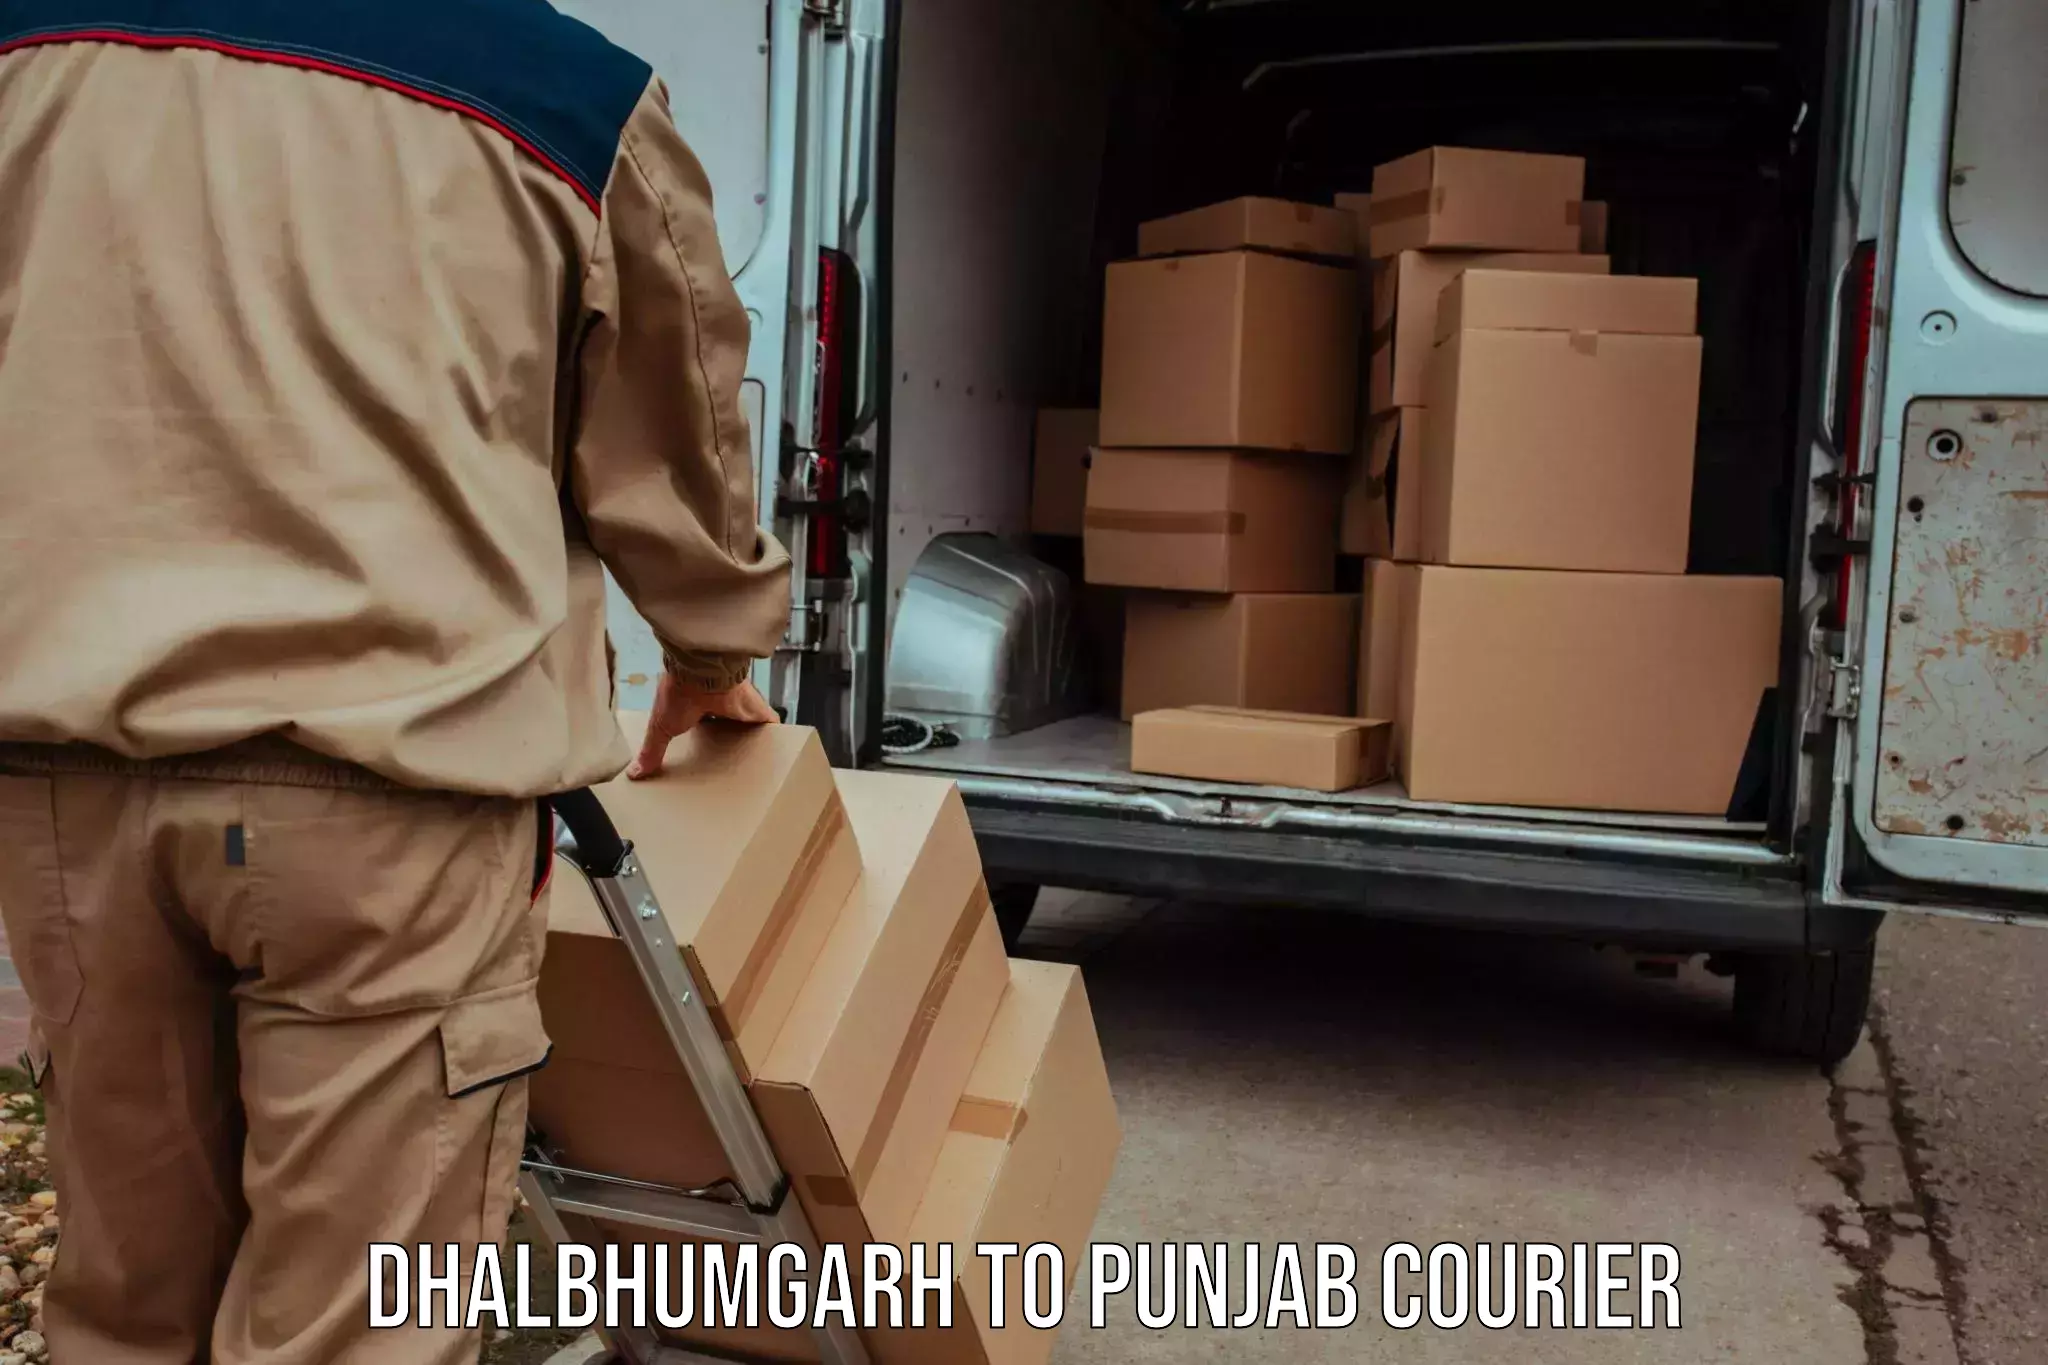 Next-day delivery options Dhalbhumgarh to Bathinda